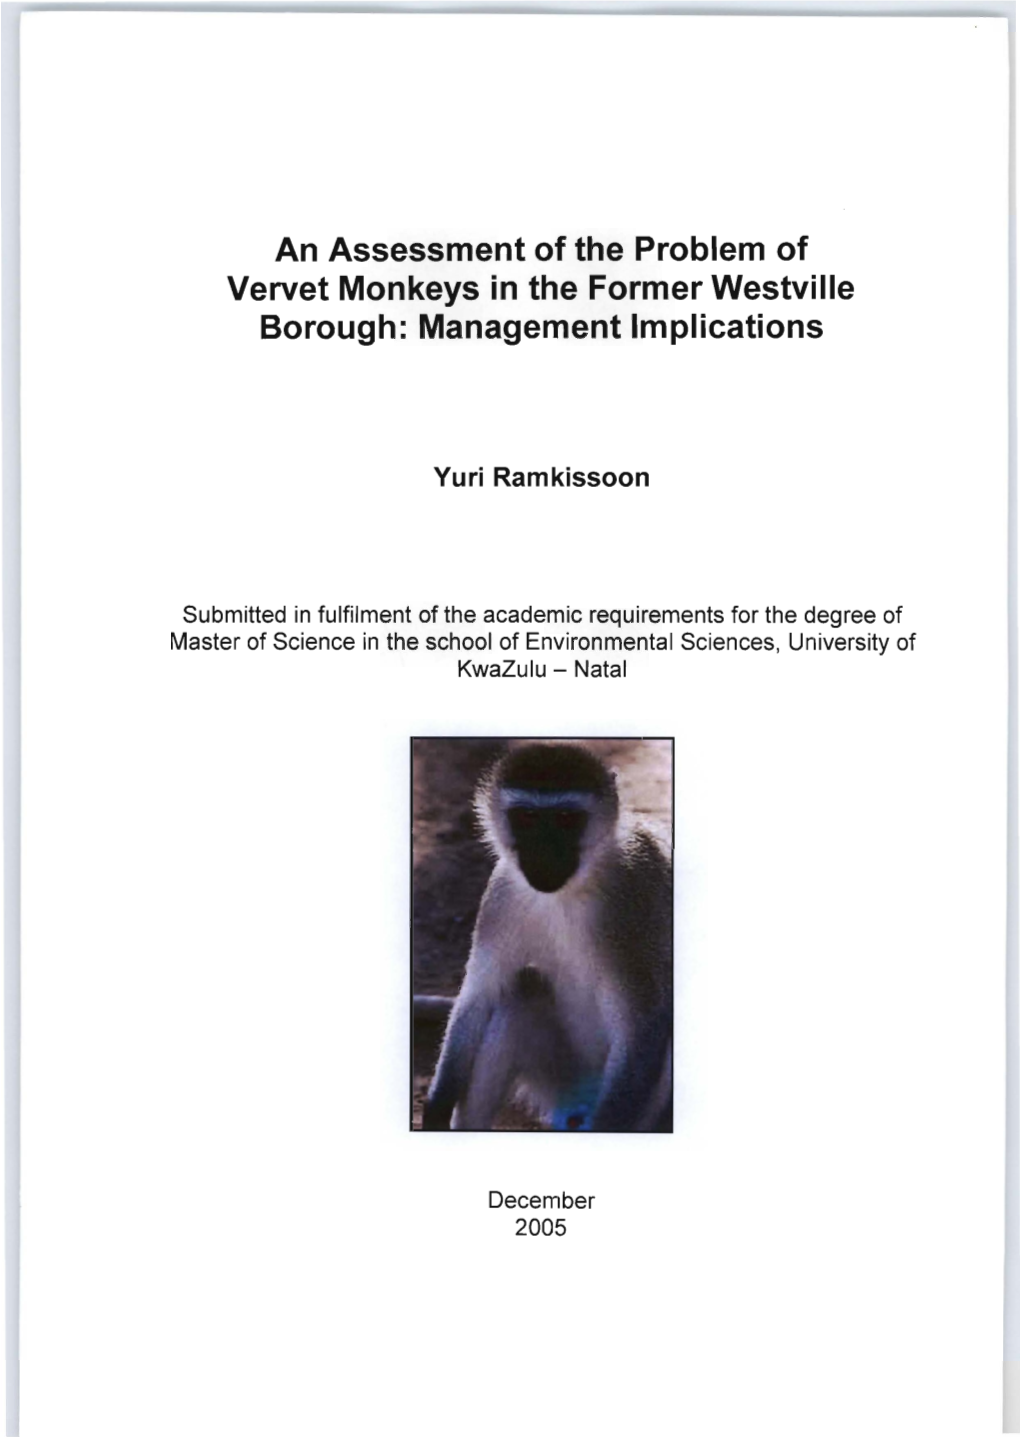 An Assessment of the Problem of Vervet Monkeys in the Former Westville Borough: Management Implications